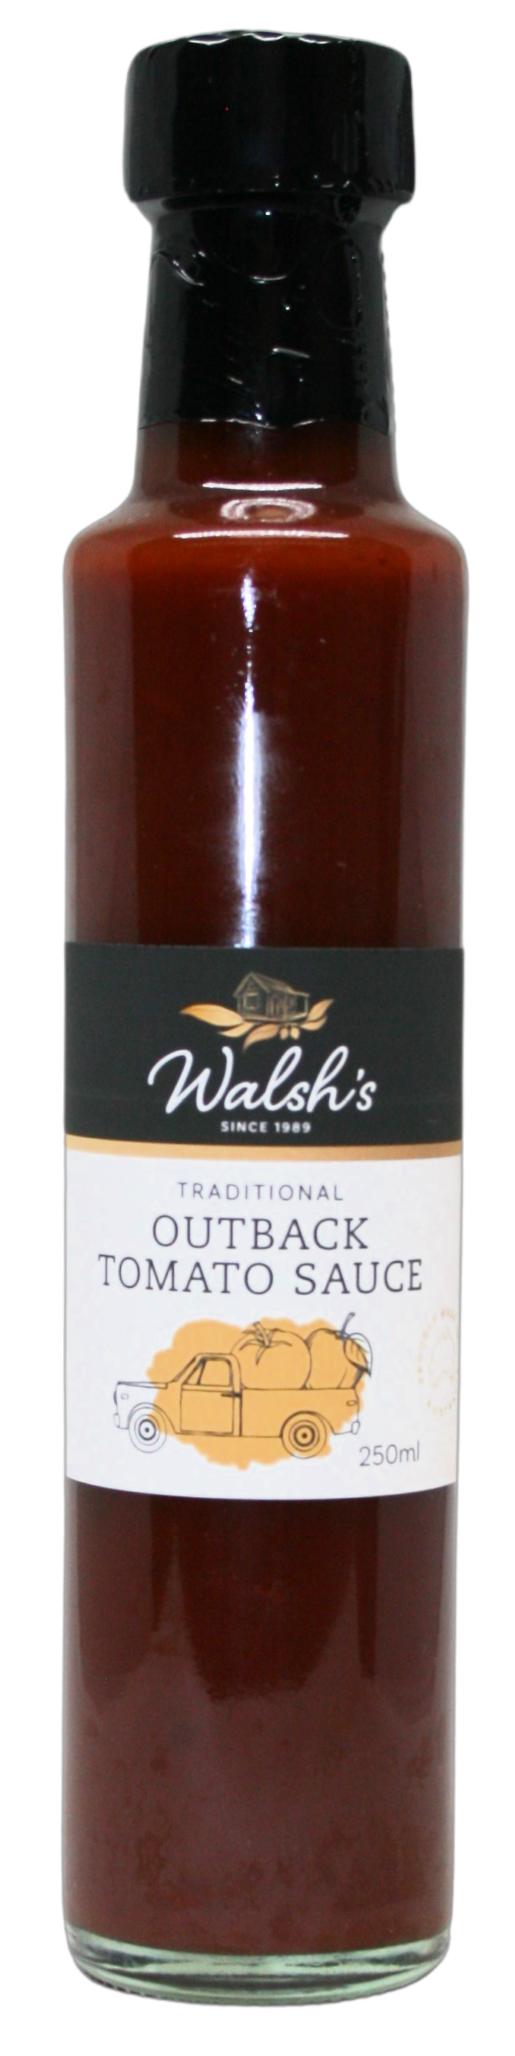 Outback Tomato Sauce - 250ml Bottle